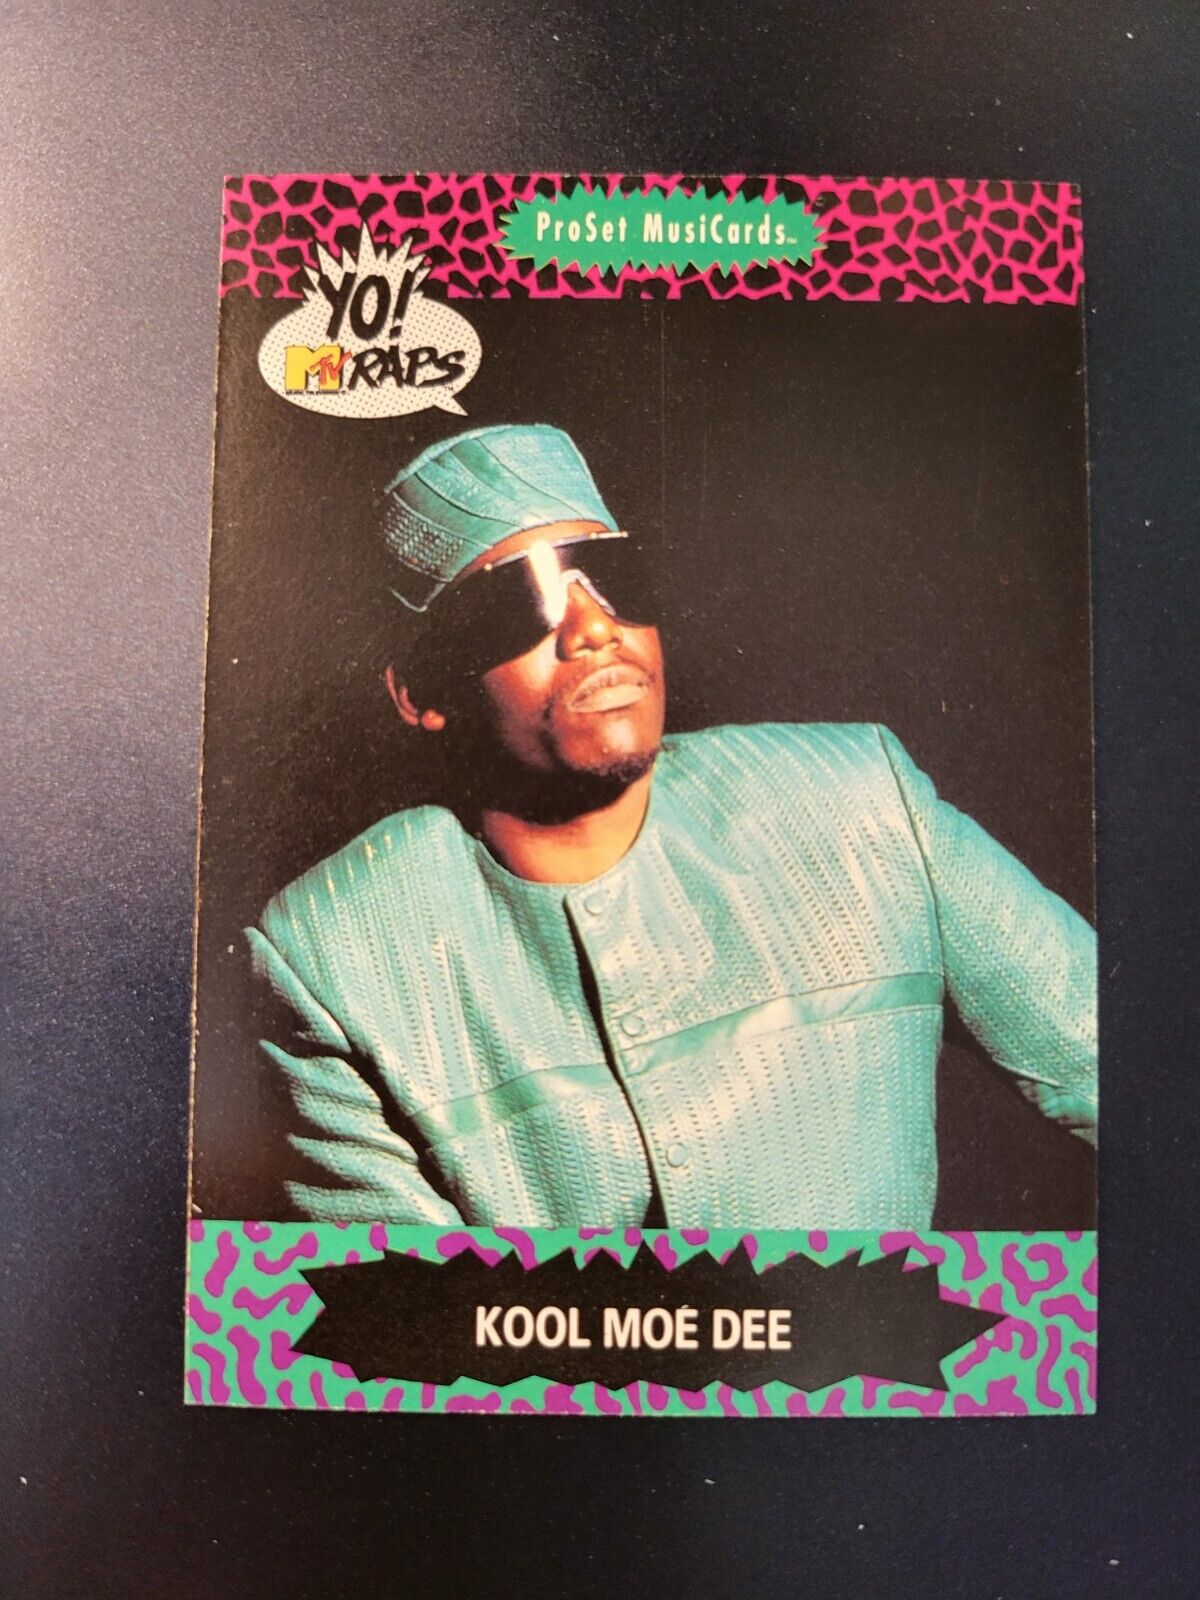 1991 ProSet MusiCards YO MTV Raps Kool Moe Dee RC card #41